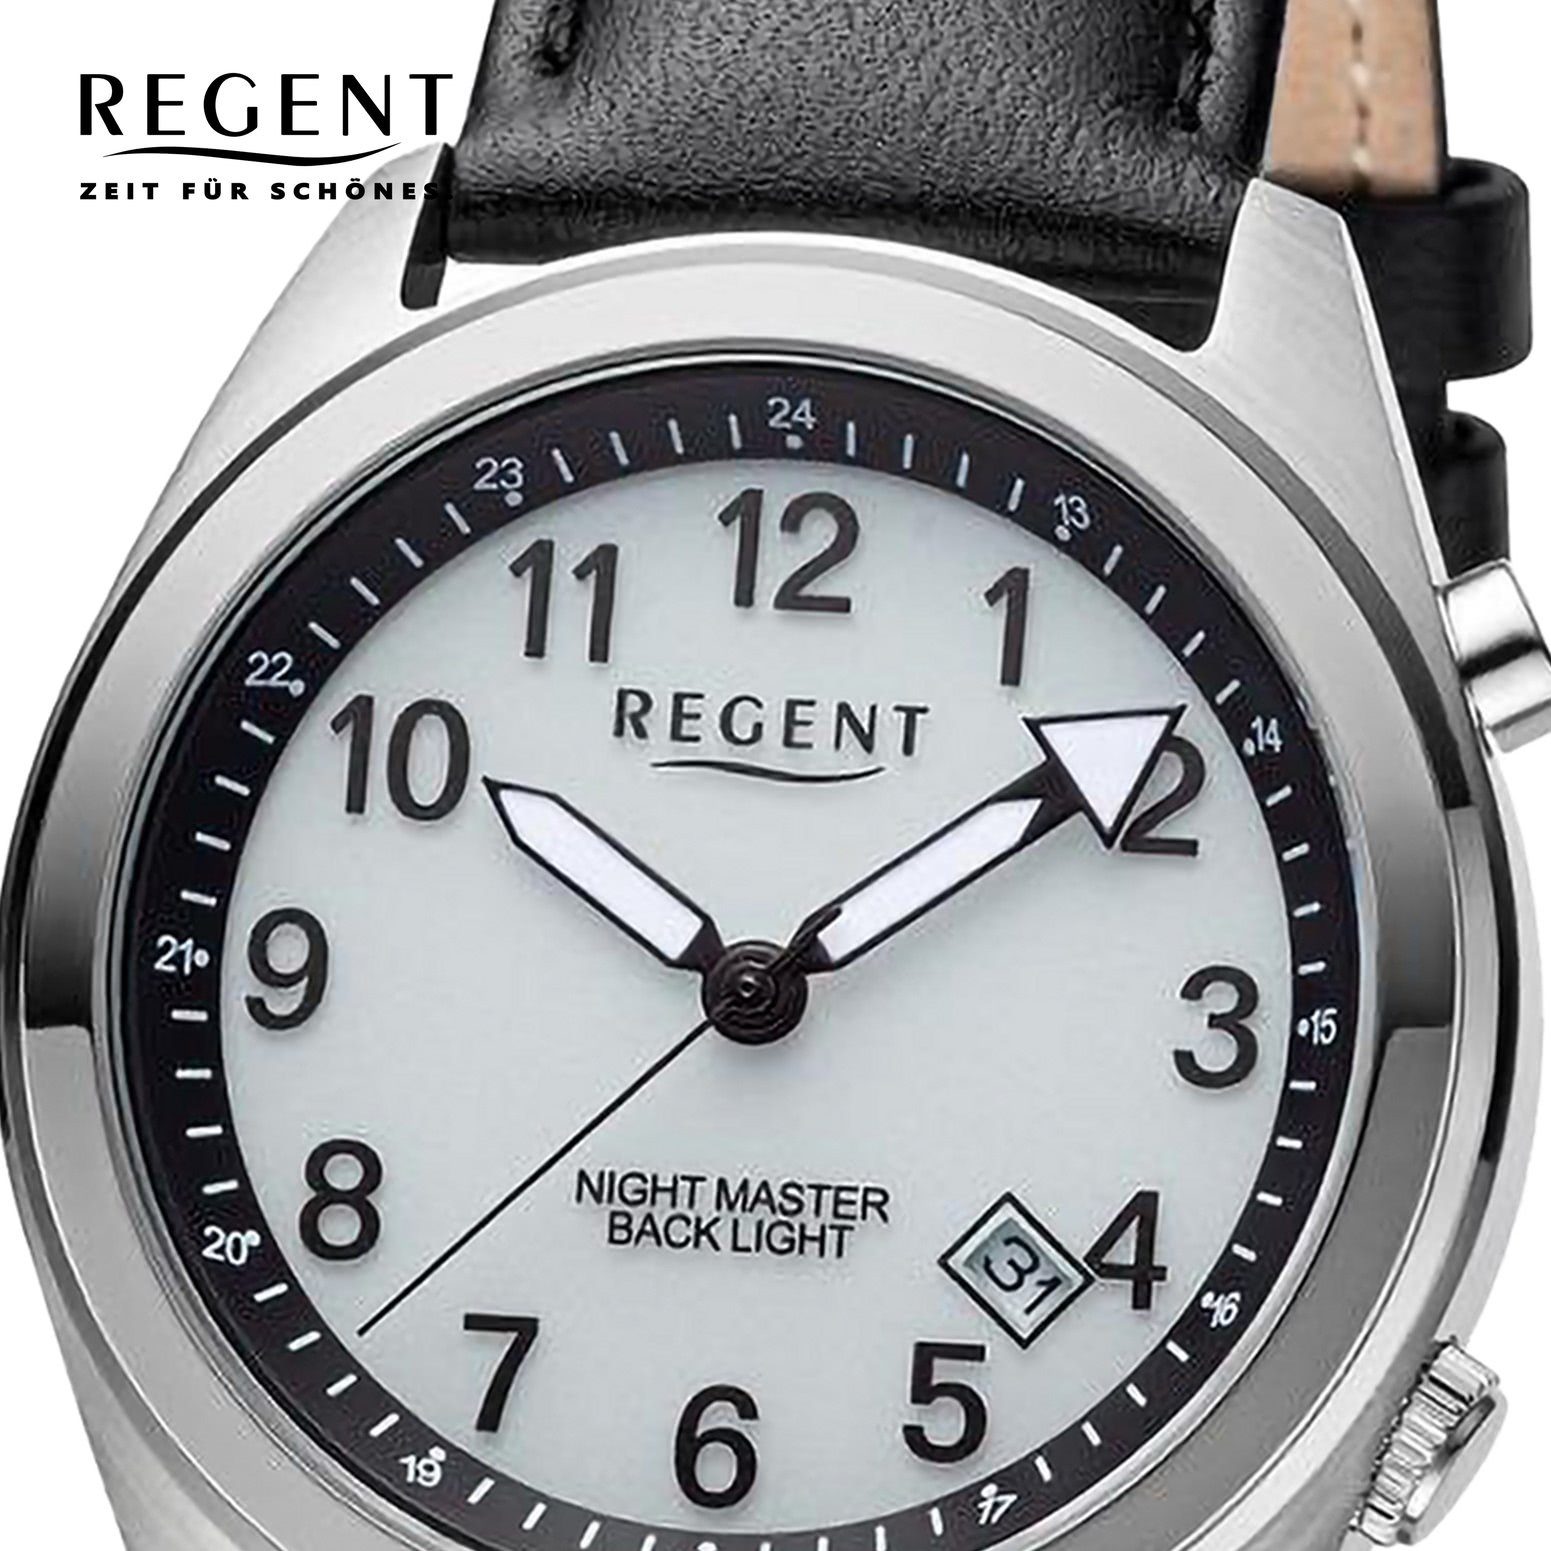 Herren Regent (ca. Armbanduhr Lederarmband groß Herren Quarzuhr rund, Regent extra Armbanduhr Analog, 37,6mm),